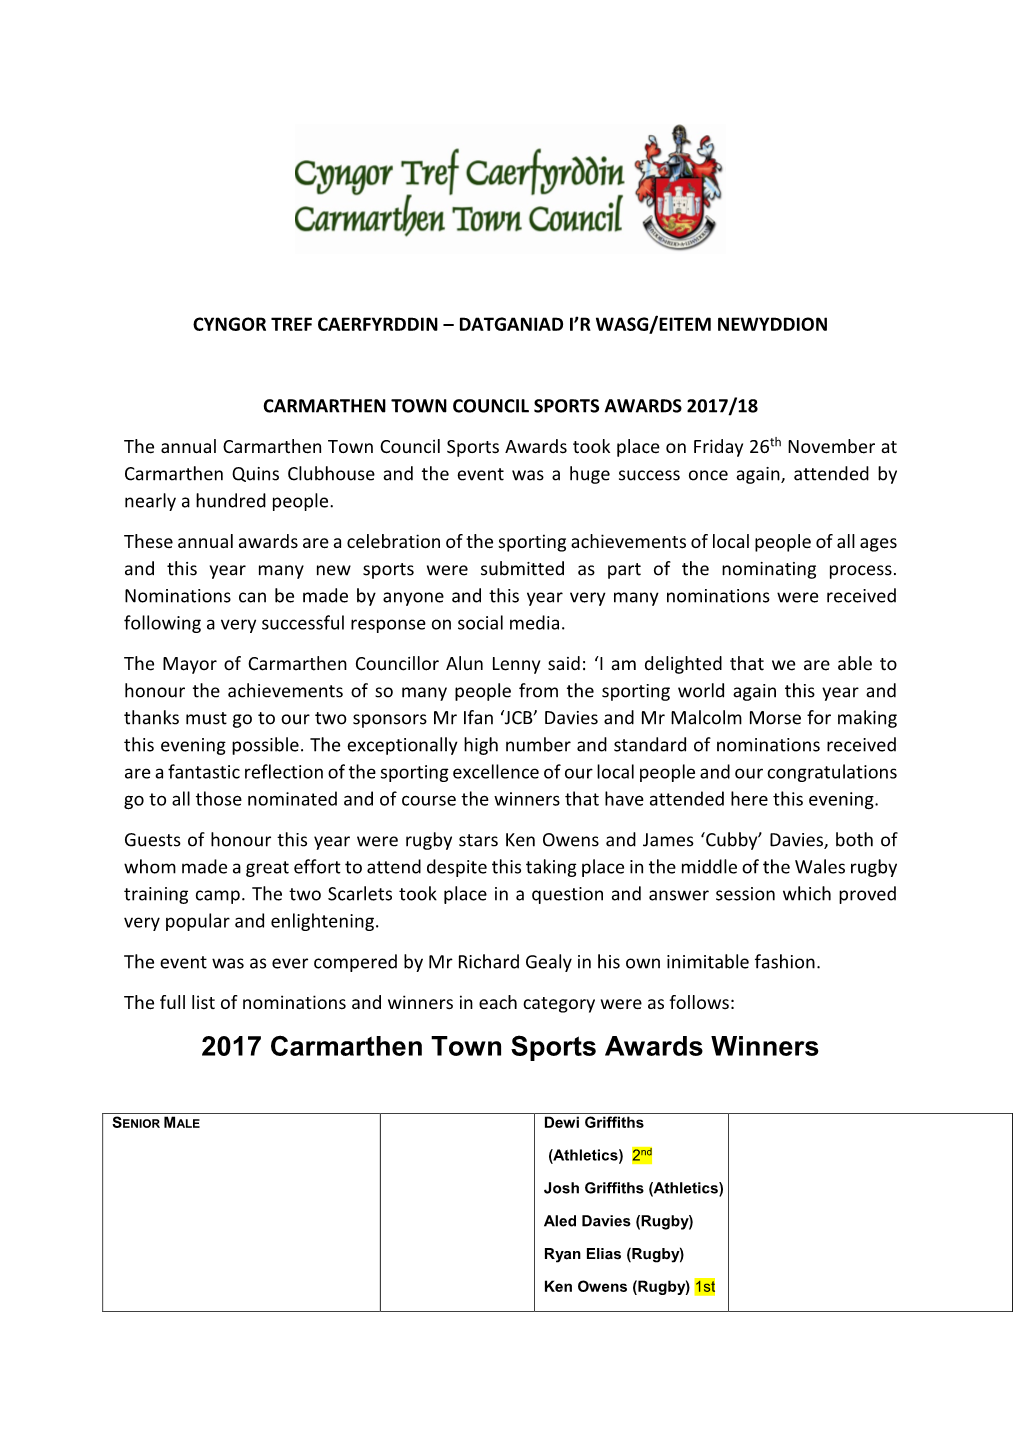 2017 Carmarthen Town Sports Awards Winners